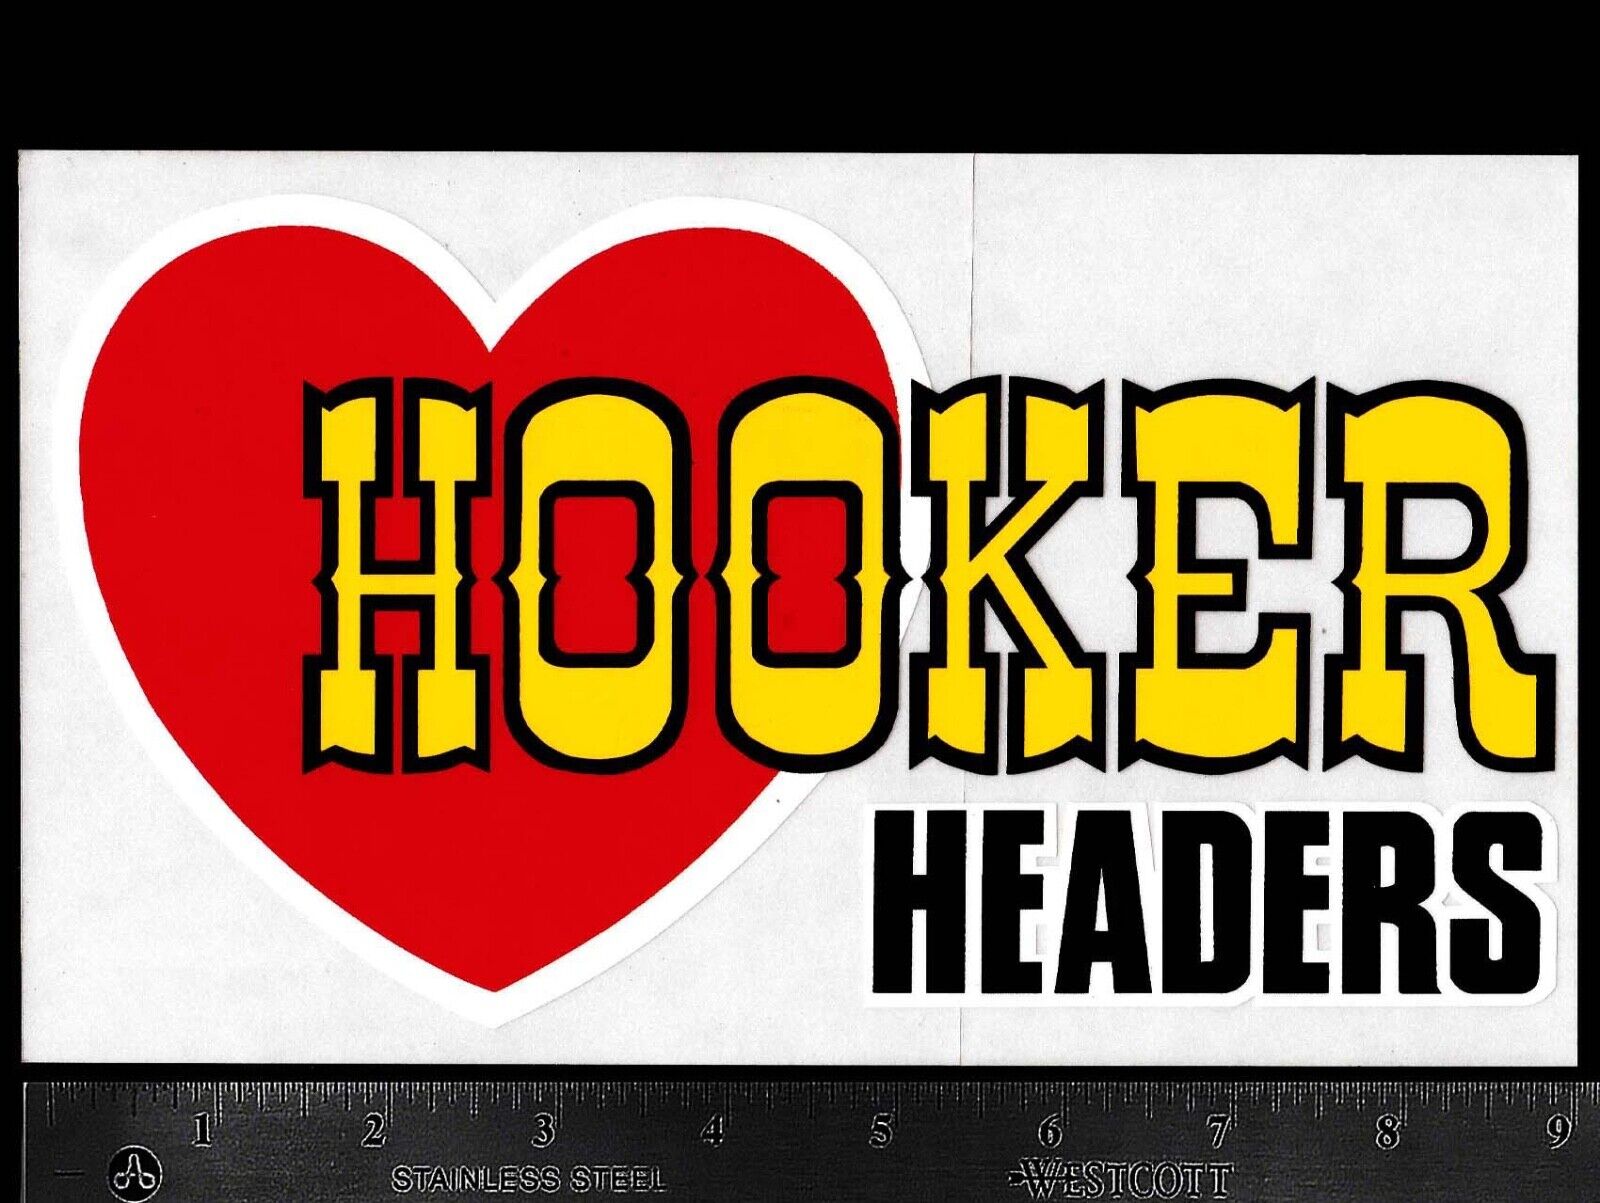 HOOKER HEADERS - Original Vintage 1970's Racing Decal/Sticker  Large 9 inch size